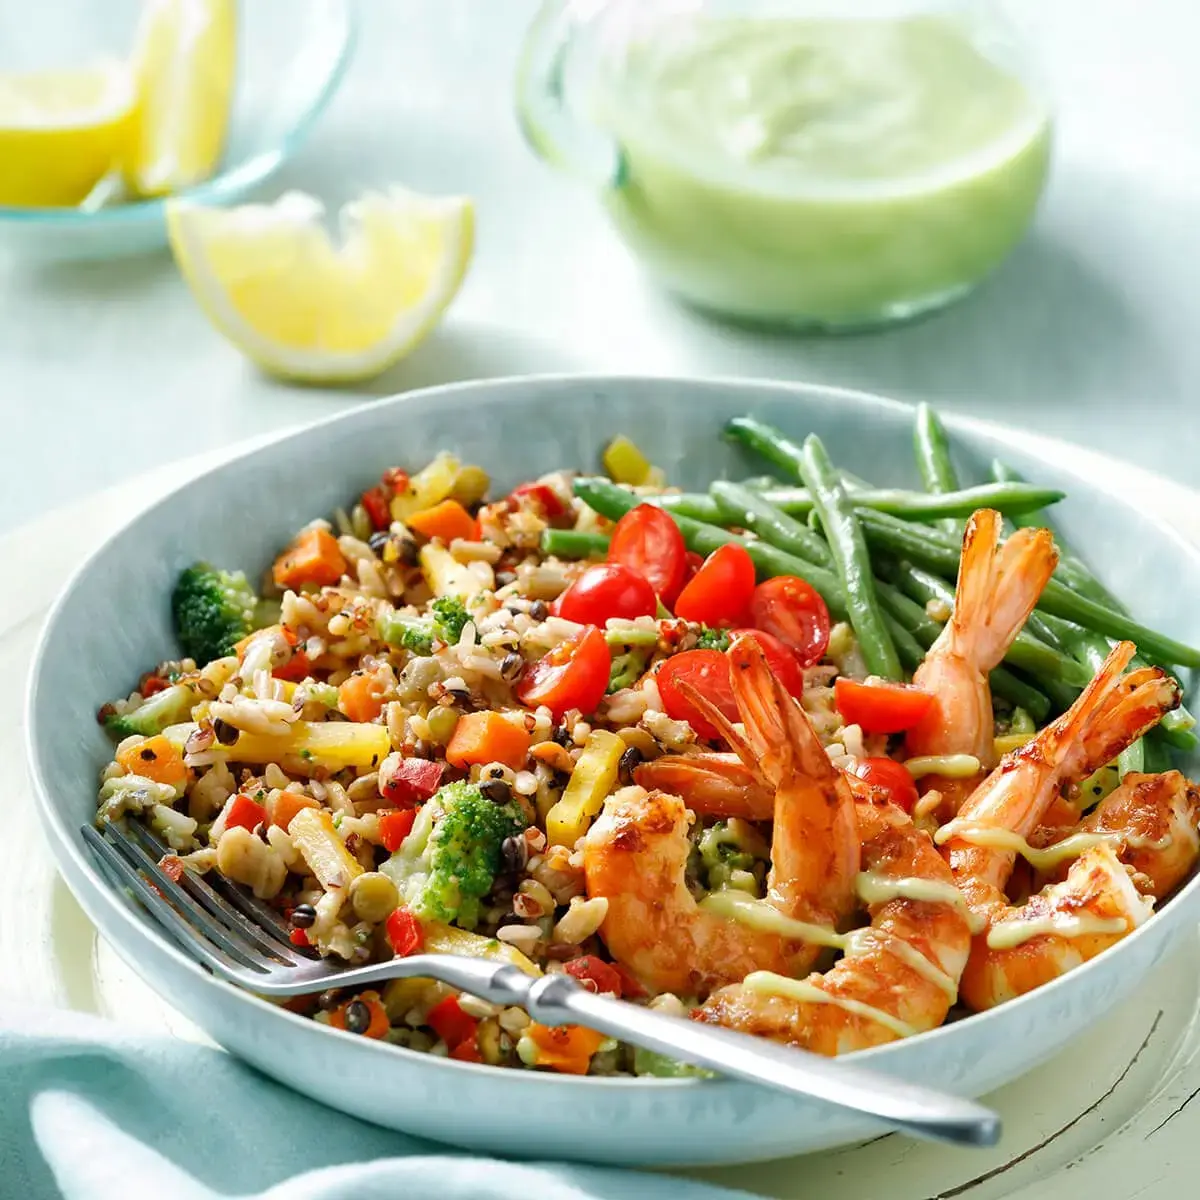 Multi-Grain Orzo, Red Quinoa and Grilled Shrimp Mediterranean Bowl Recipe Card